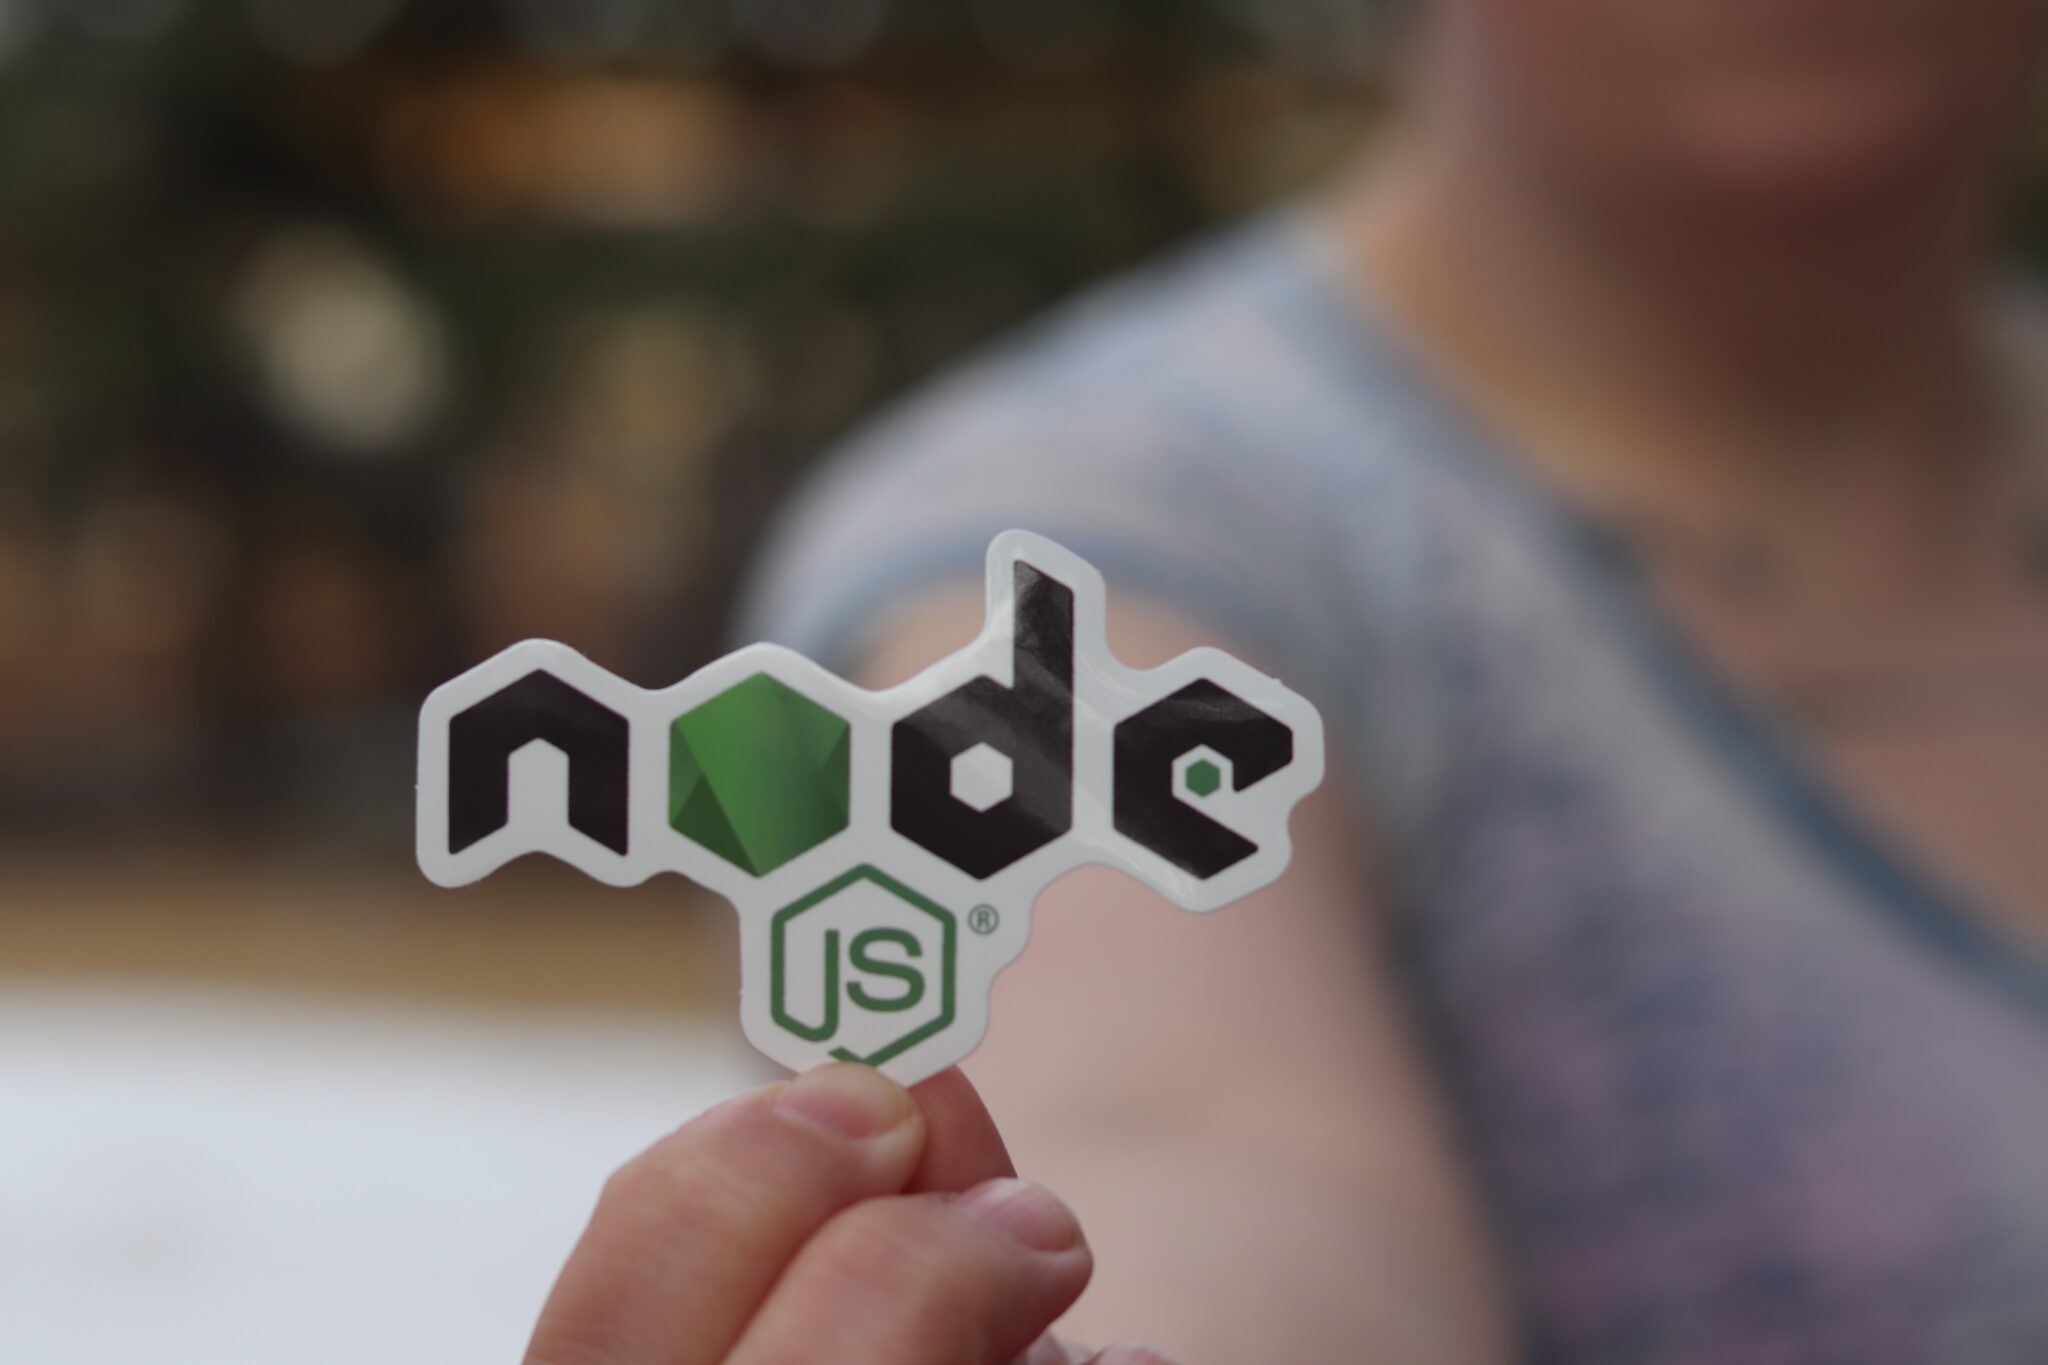 Node js app development company in india